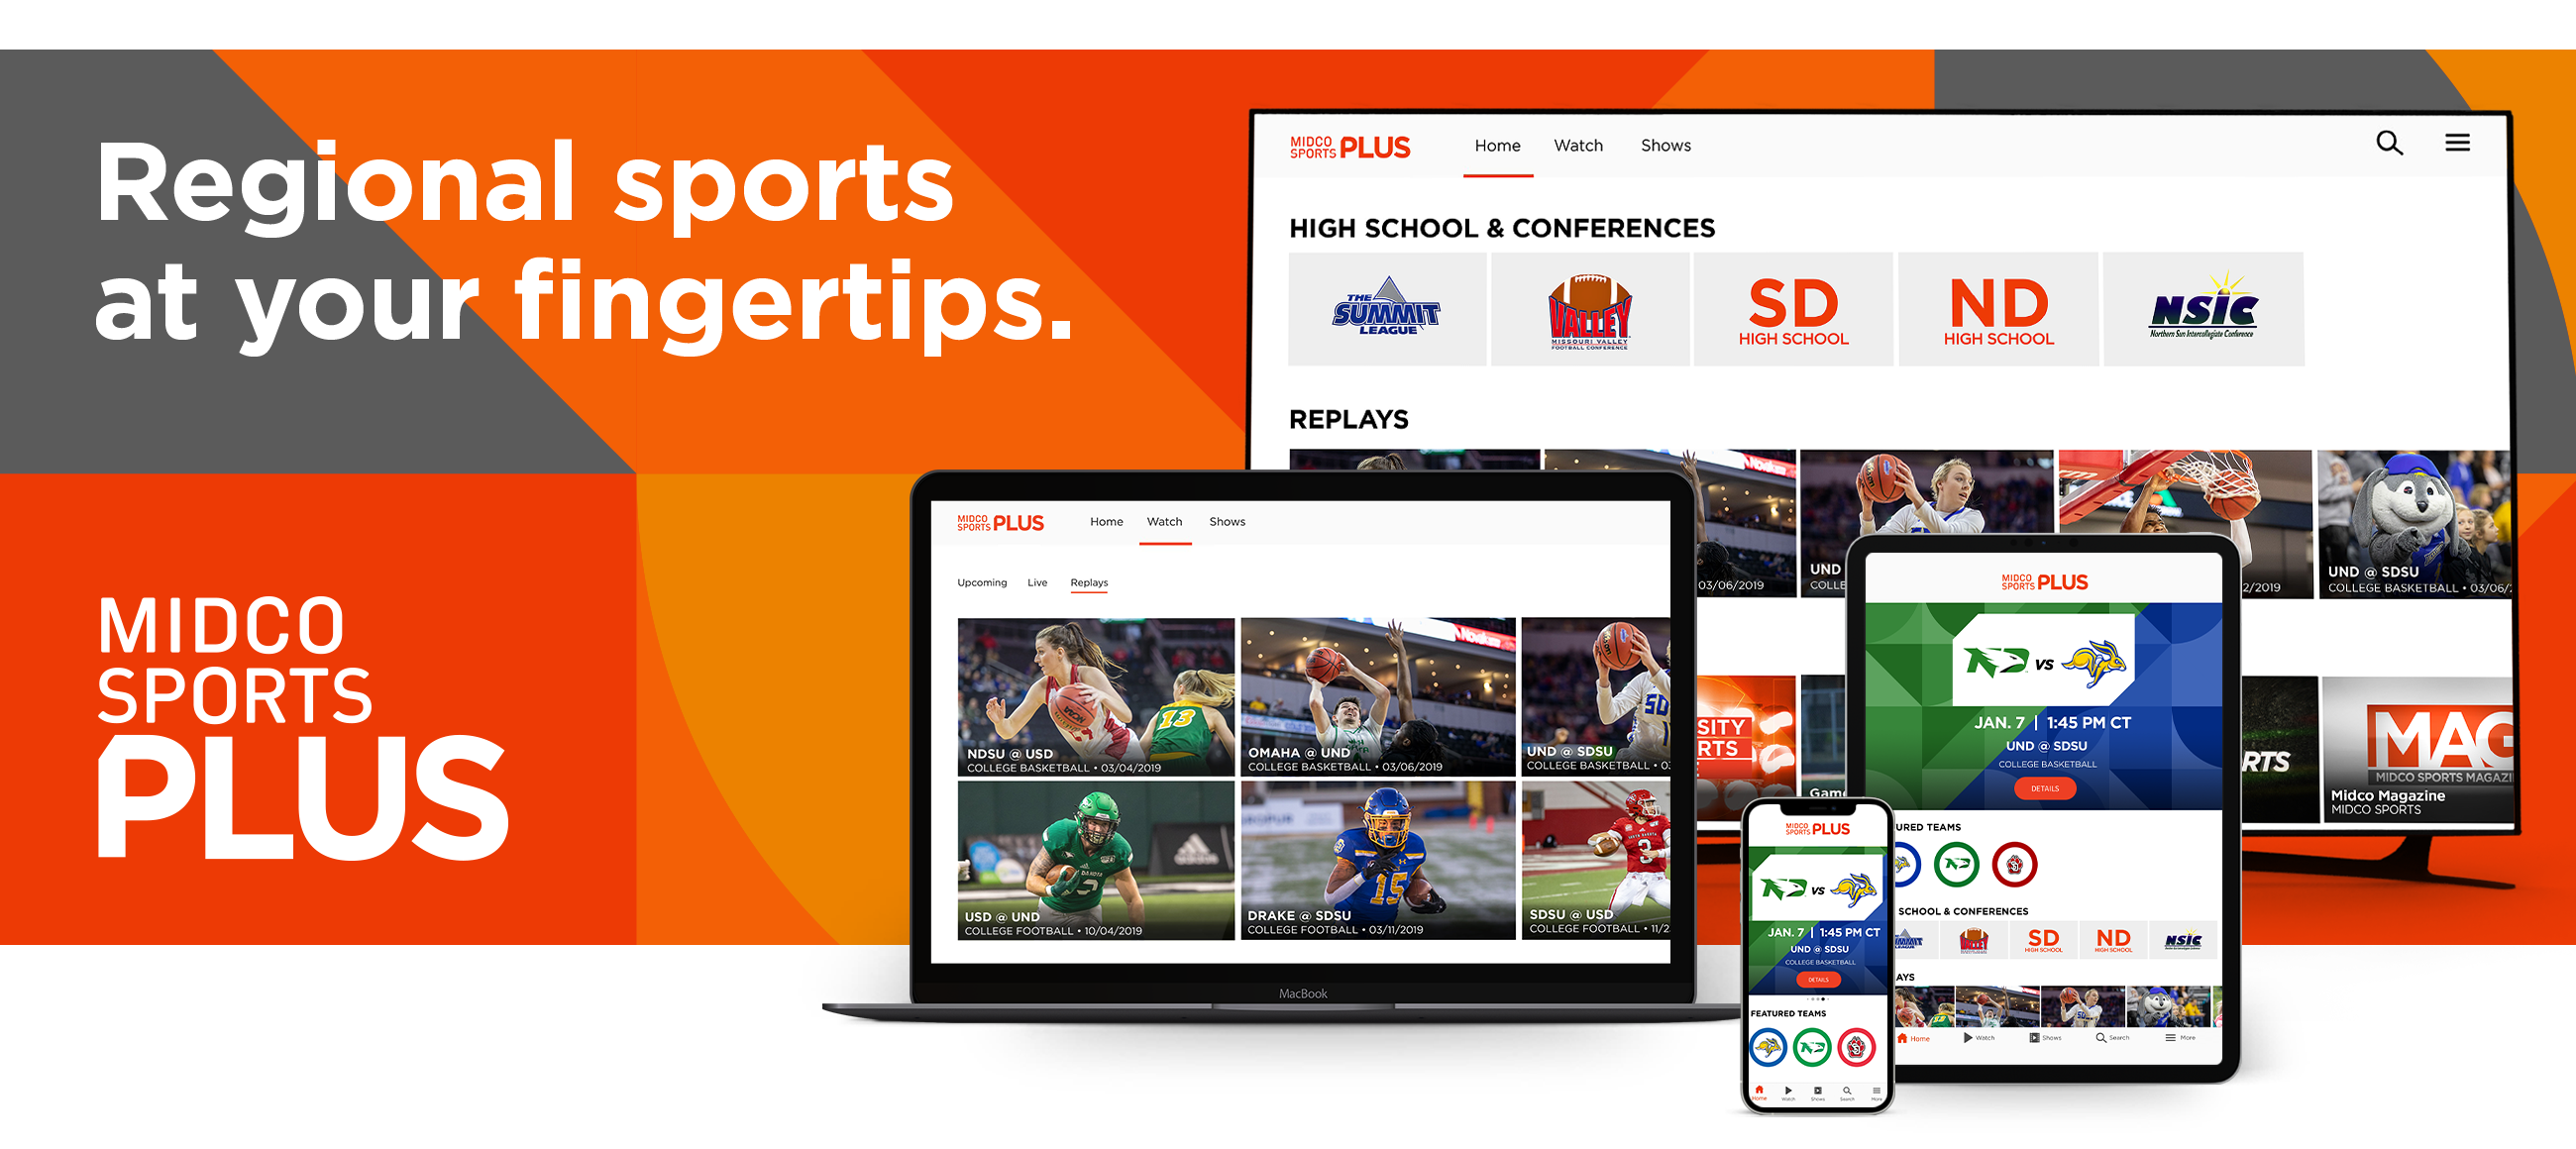 Midco Sports Plus